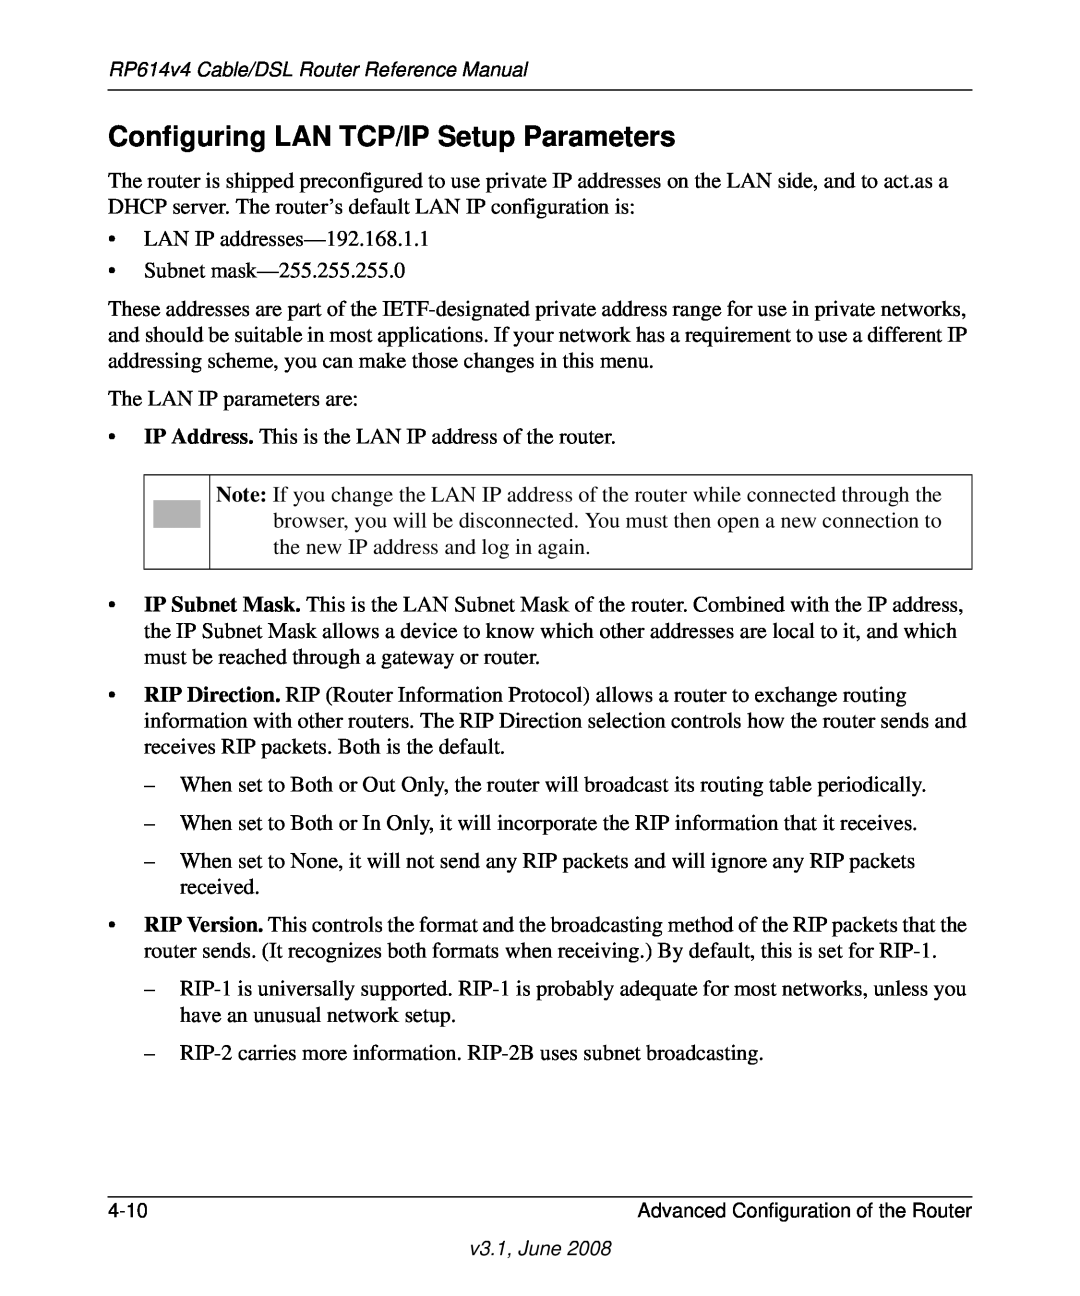 NETGEAR RP614 v4 manual Configuring LAN TCP/IP Setup Parameters 